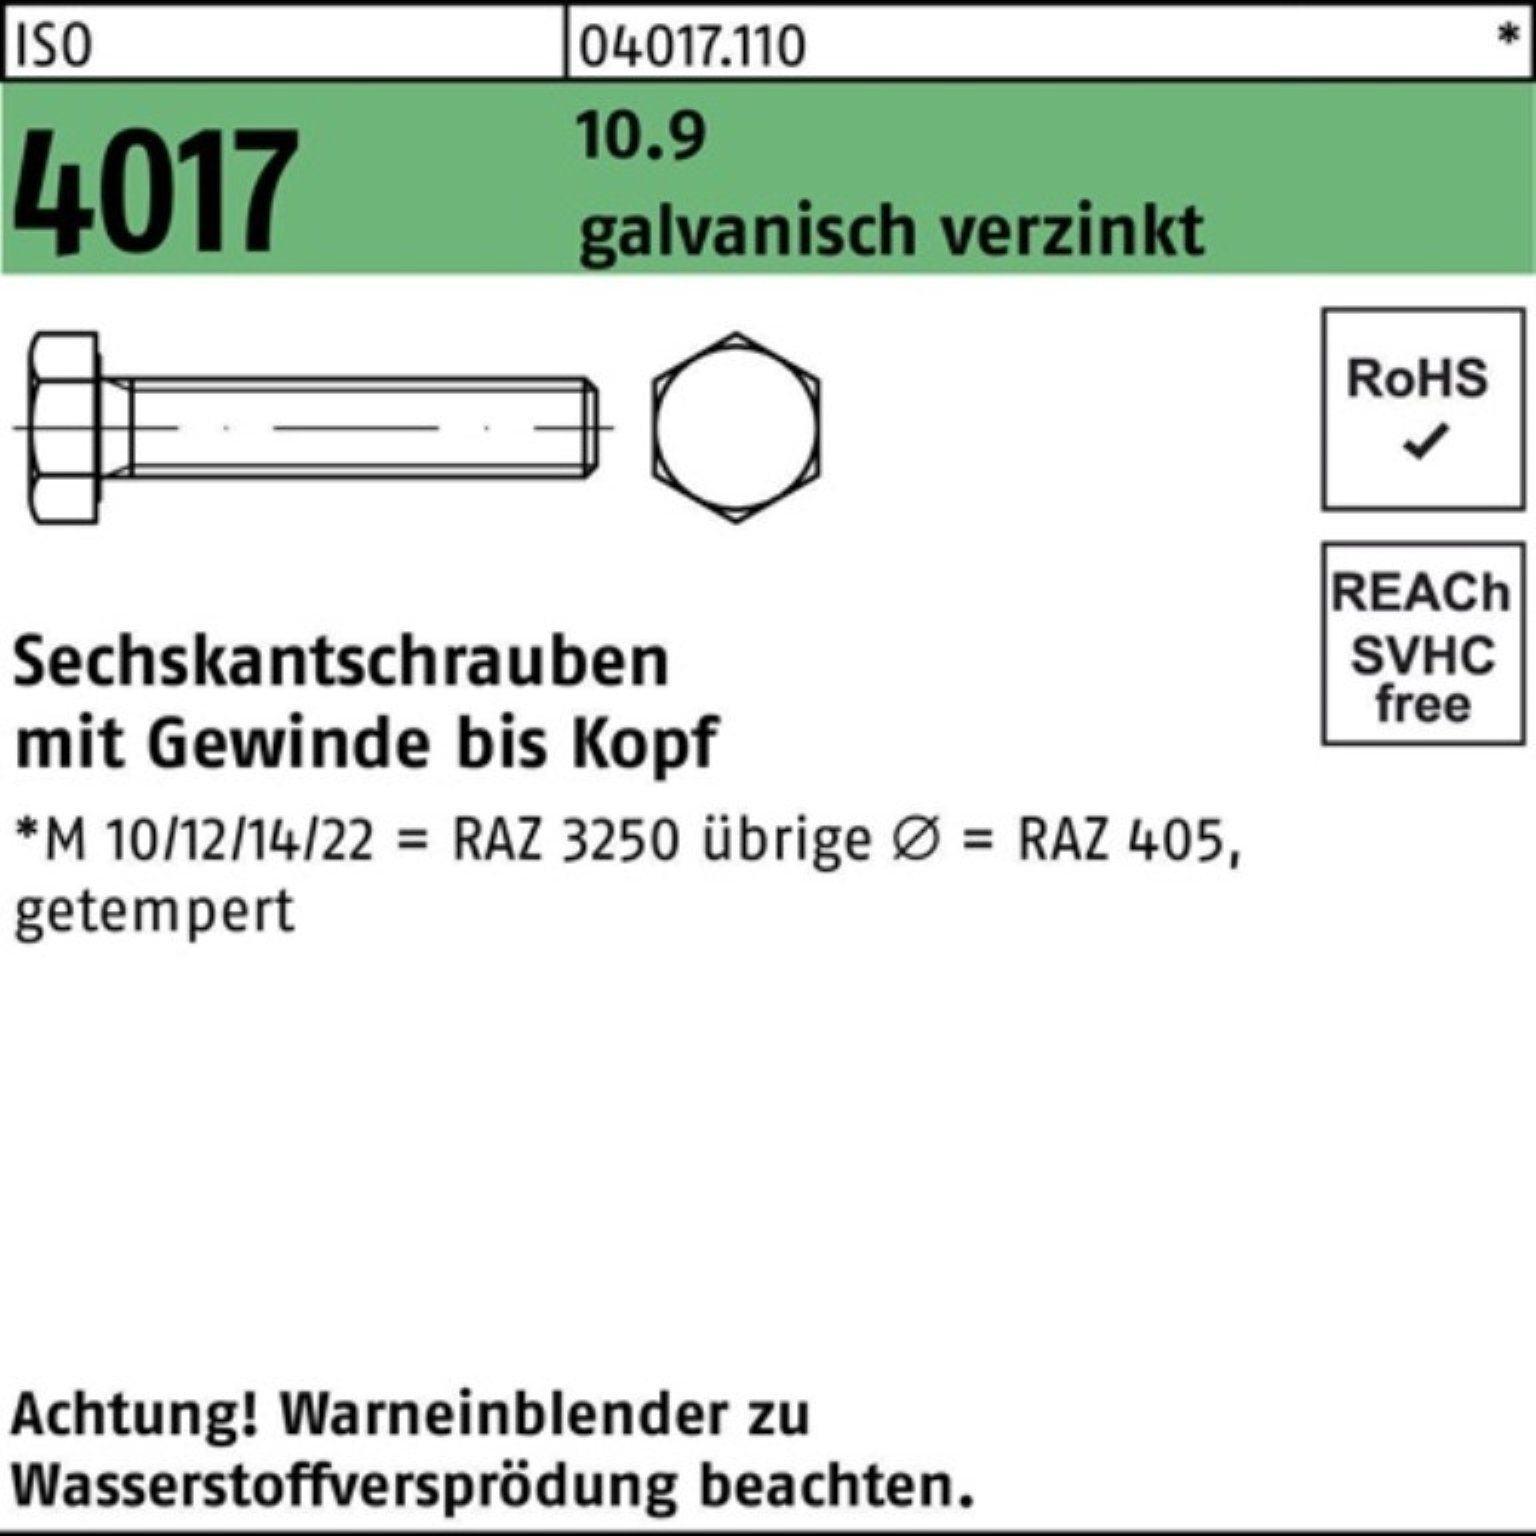 Bufab Sechskantschraube 100er 20 VG 100 M12x 4017 10.9 ISO Pack Sechskantschraube S galv.verz